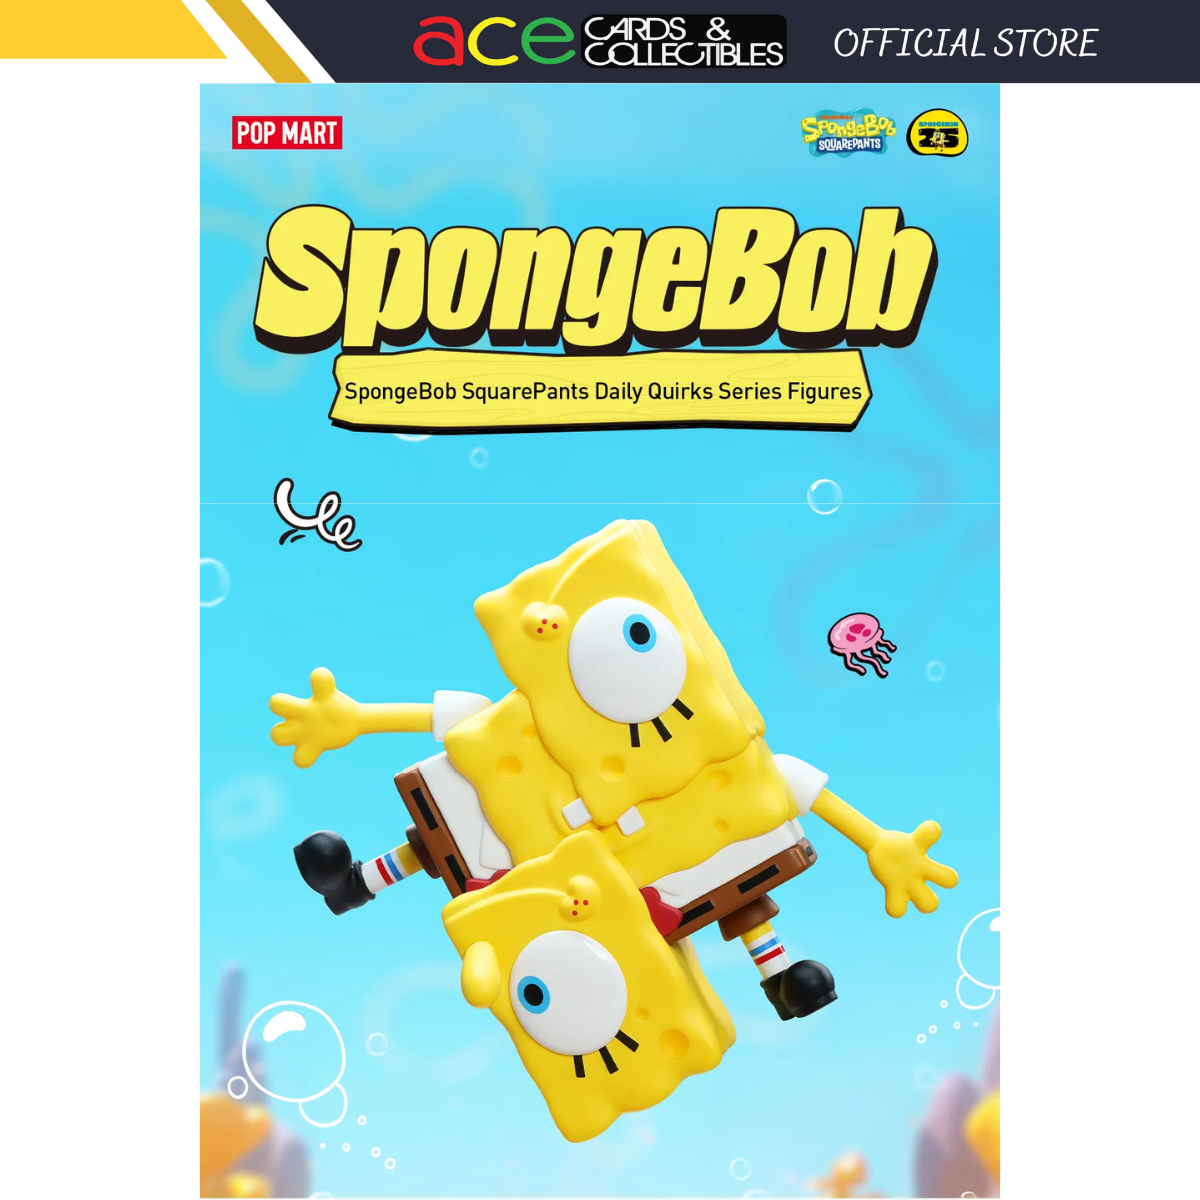 POP MART SpongeBob SquarePants Daily Quirks Series-Single Box (Random)-Pop Mart-Ace Cards & Collectibles